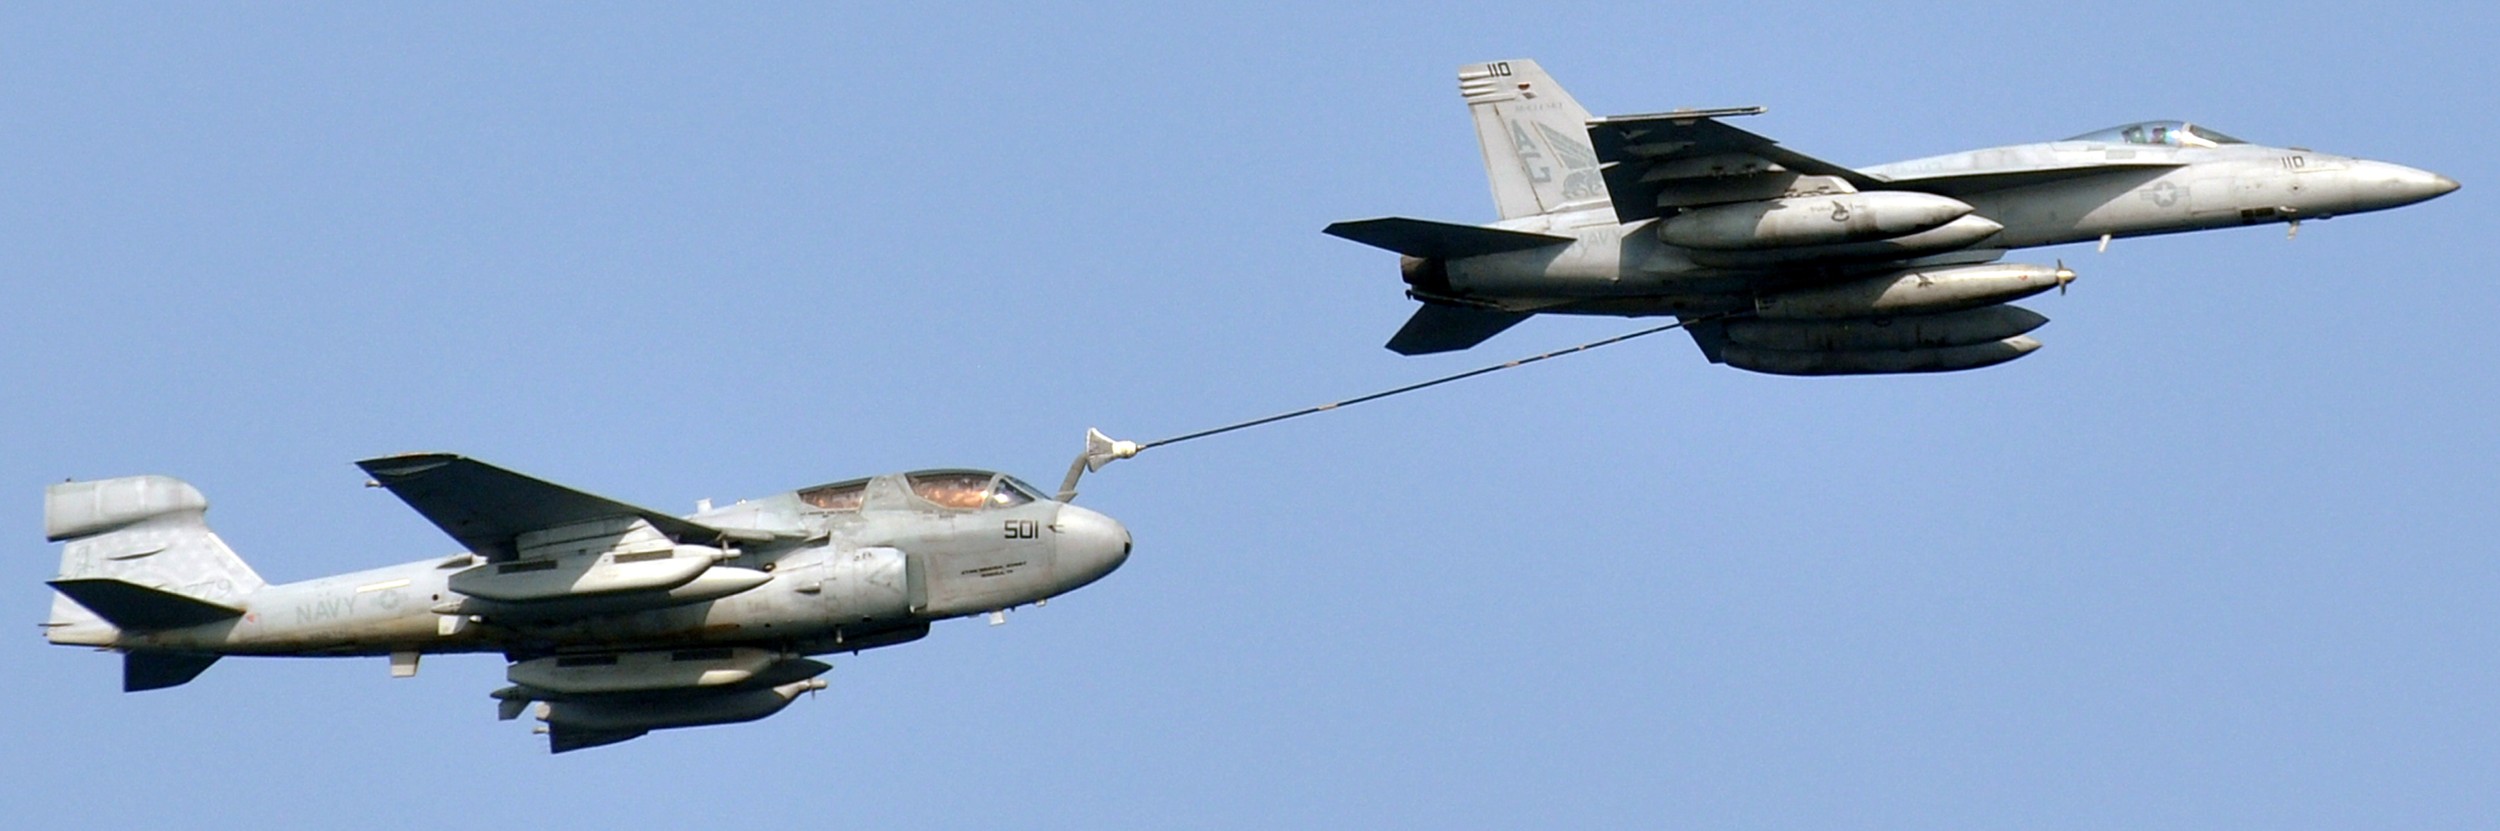 vfa-143 pukin dogs strike fighter squadron f/a-18e super hornet cvw-7 uss dwight d. eisenhower cvn-69 2012 31 refueling ea-6b prowler vaq-140